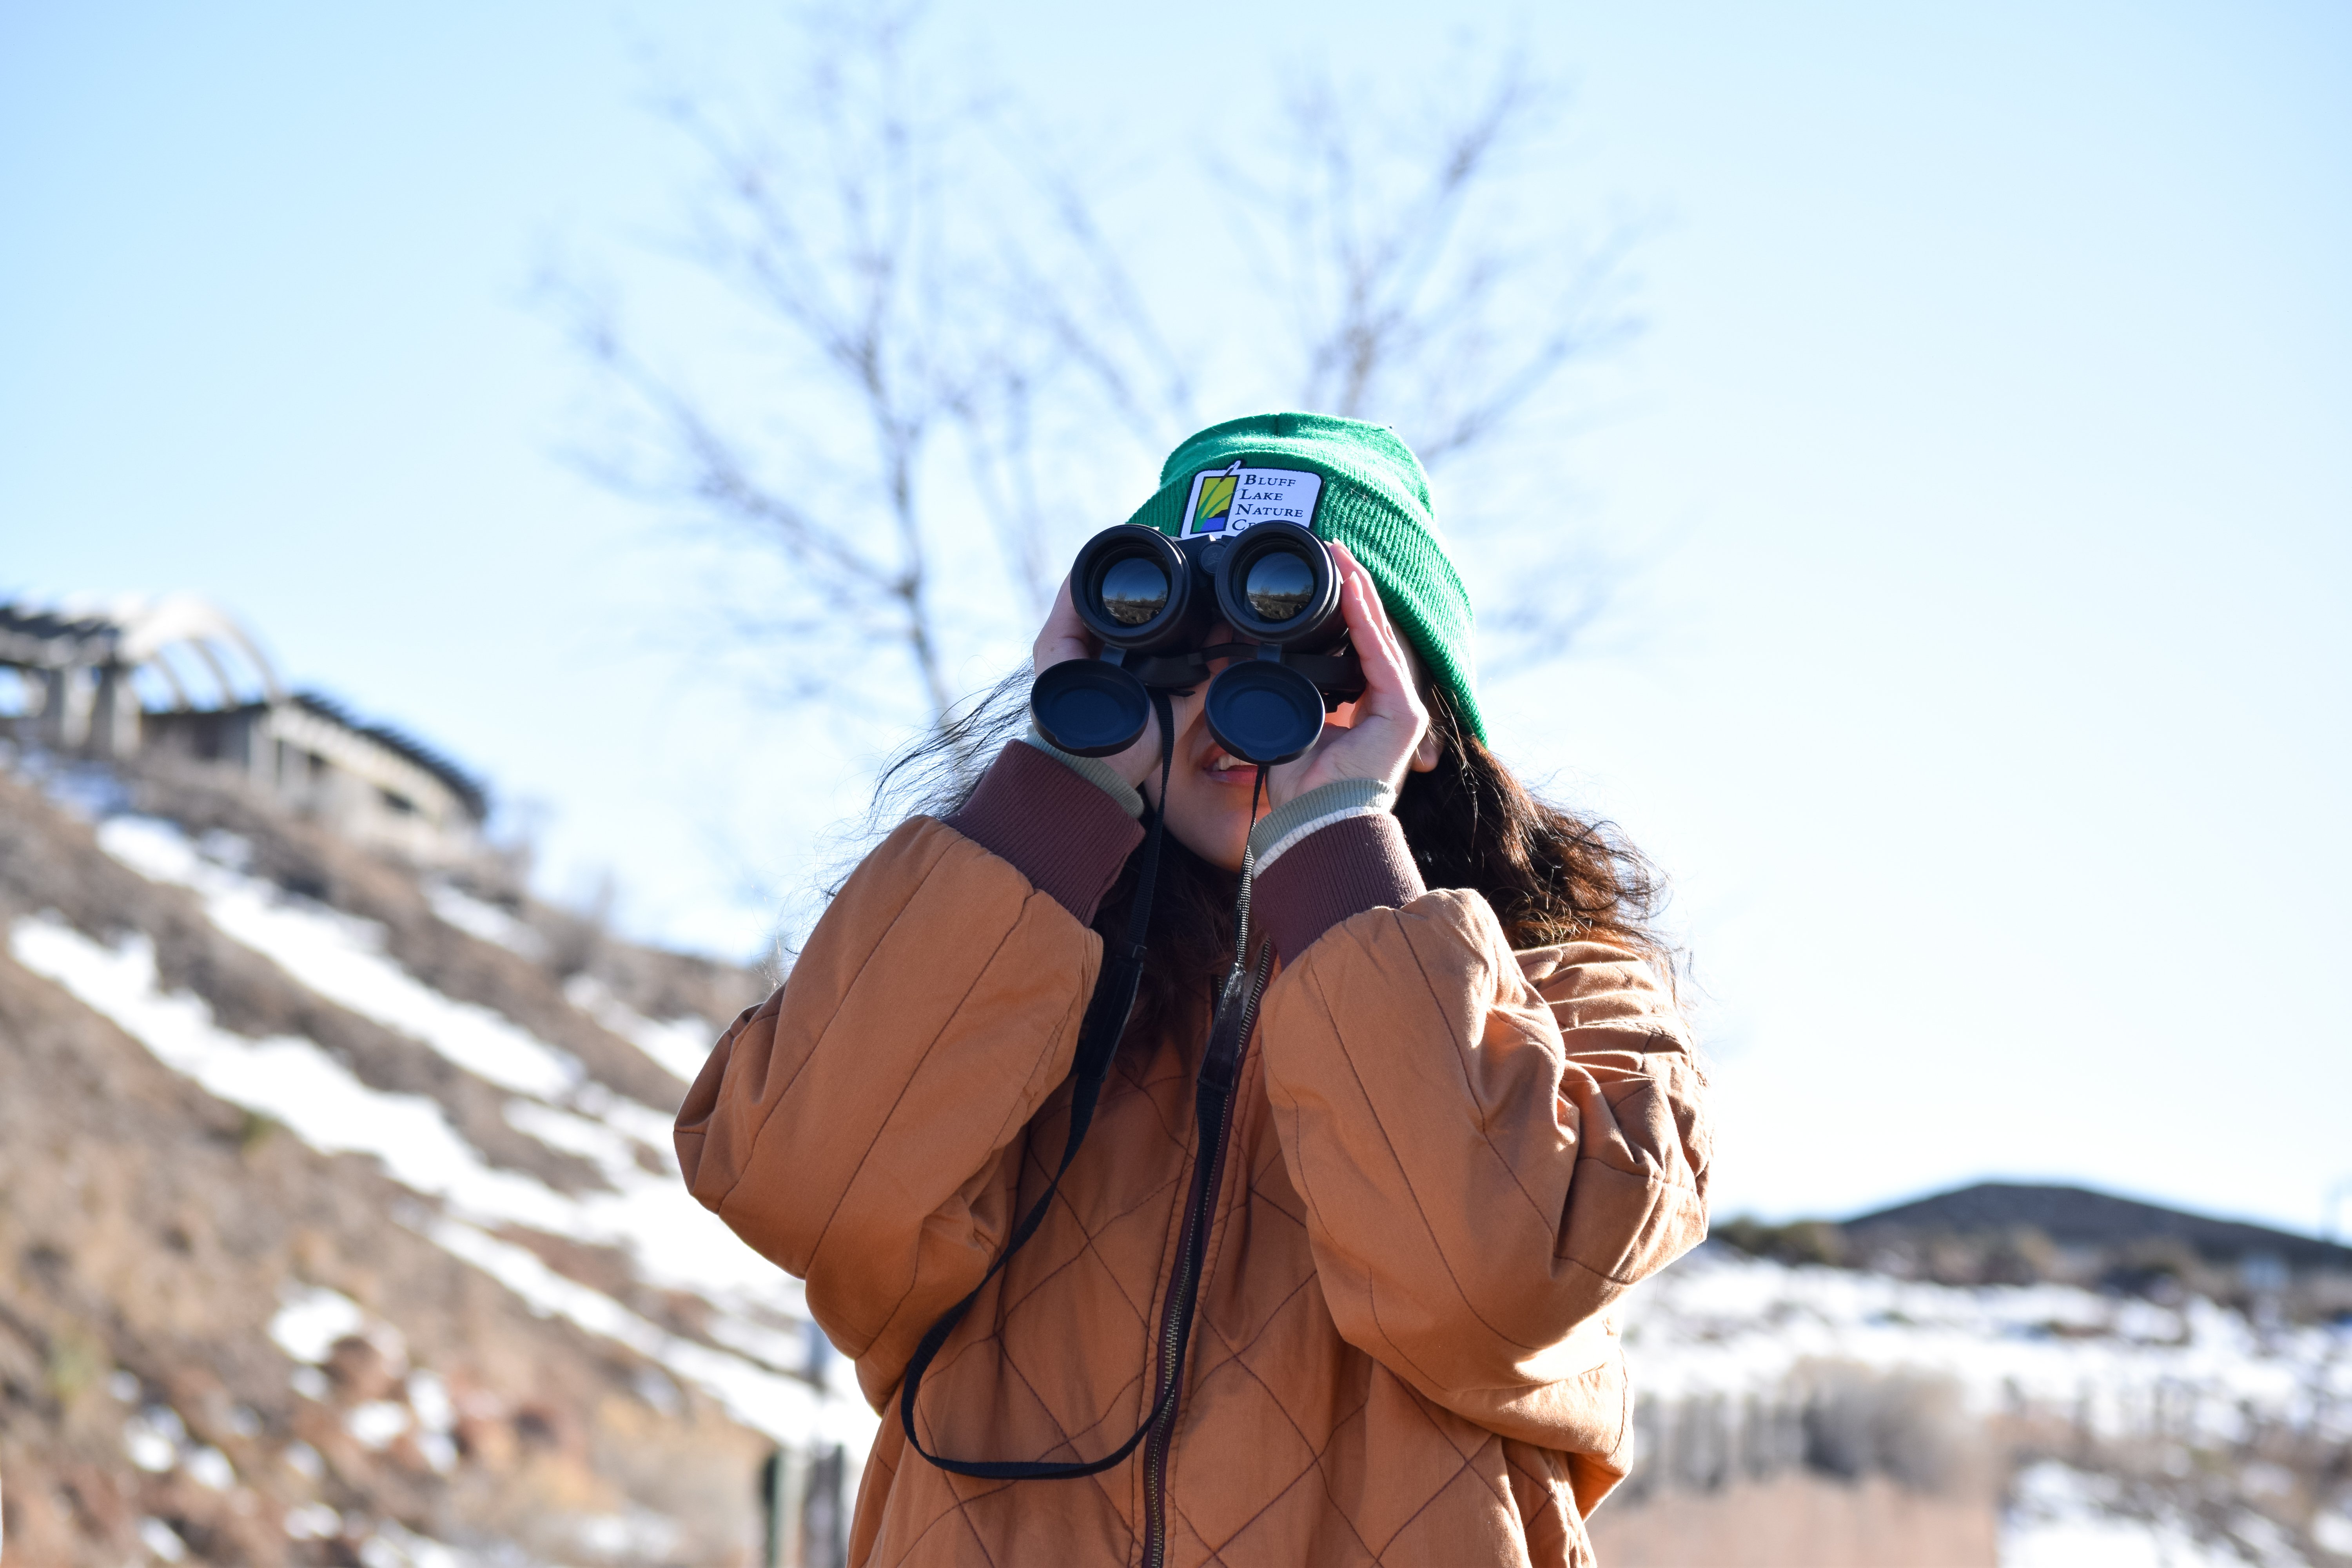 Tara uses binoculars to identify red-tailed hawks, her favorite type of bird.